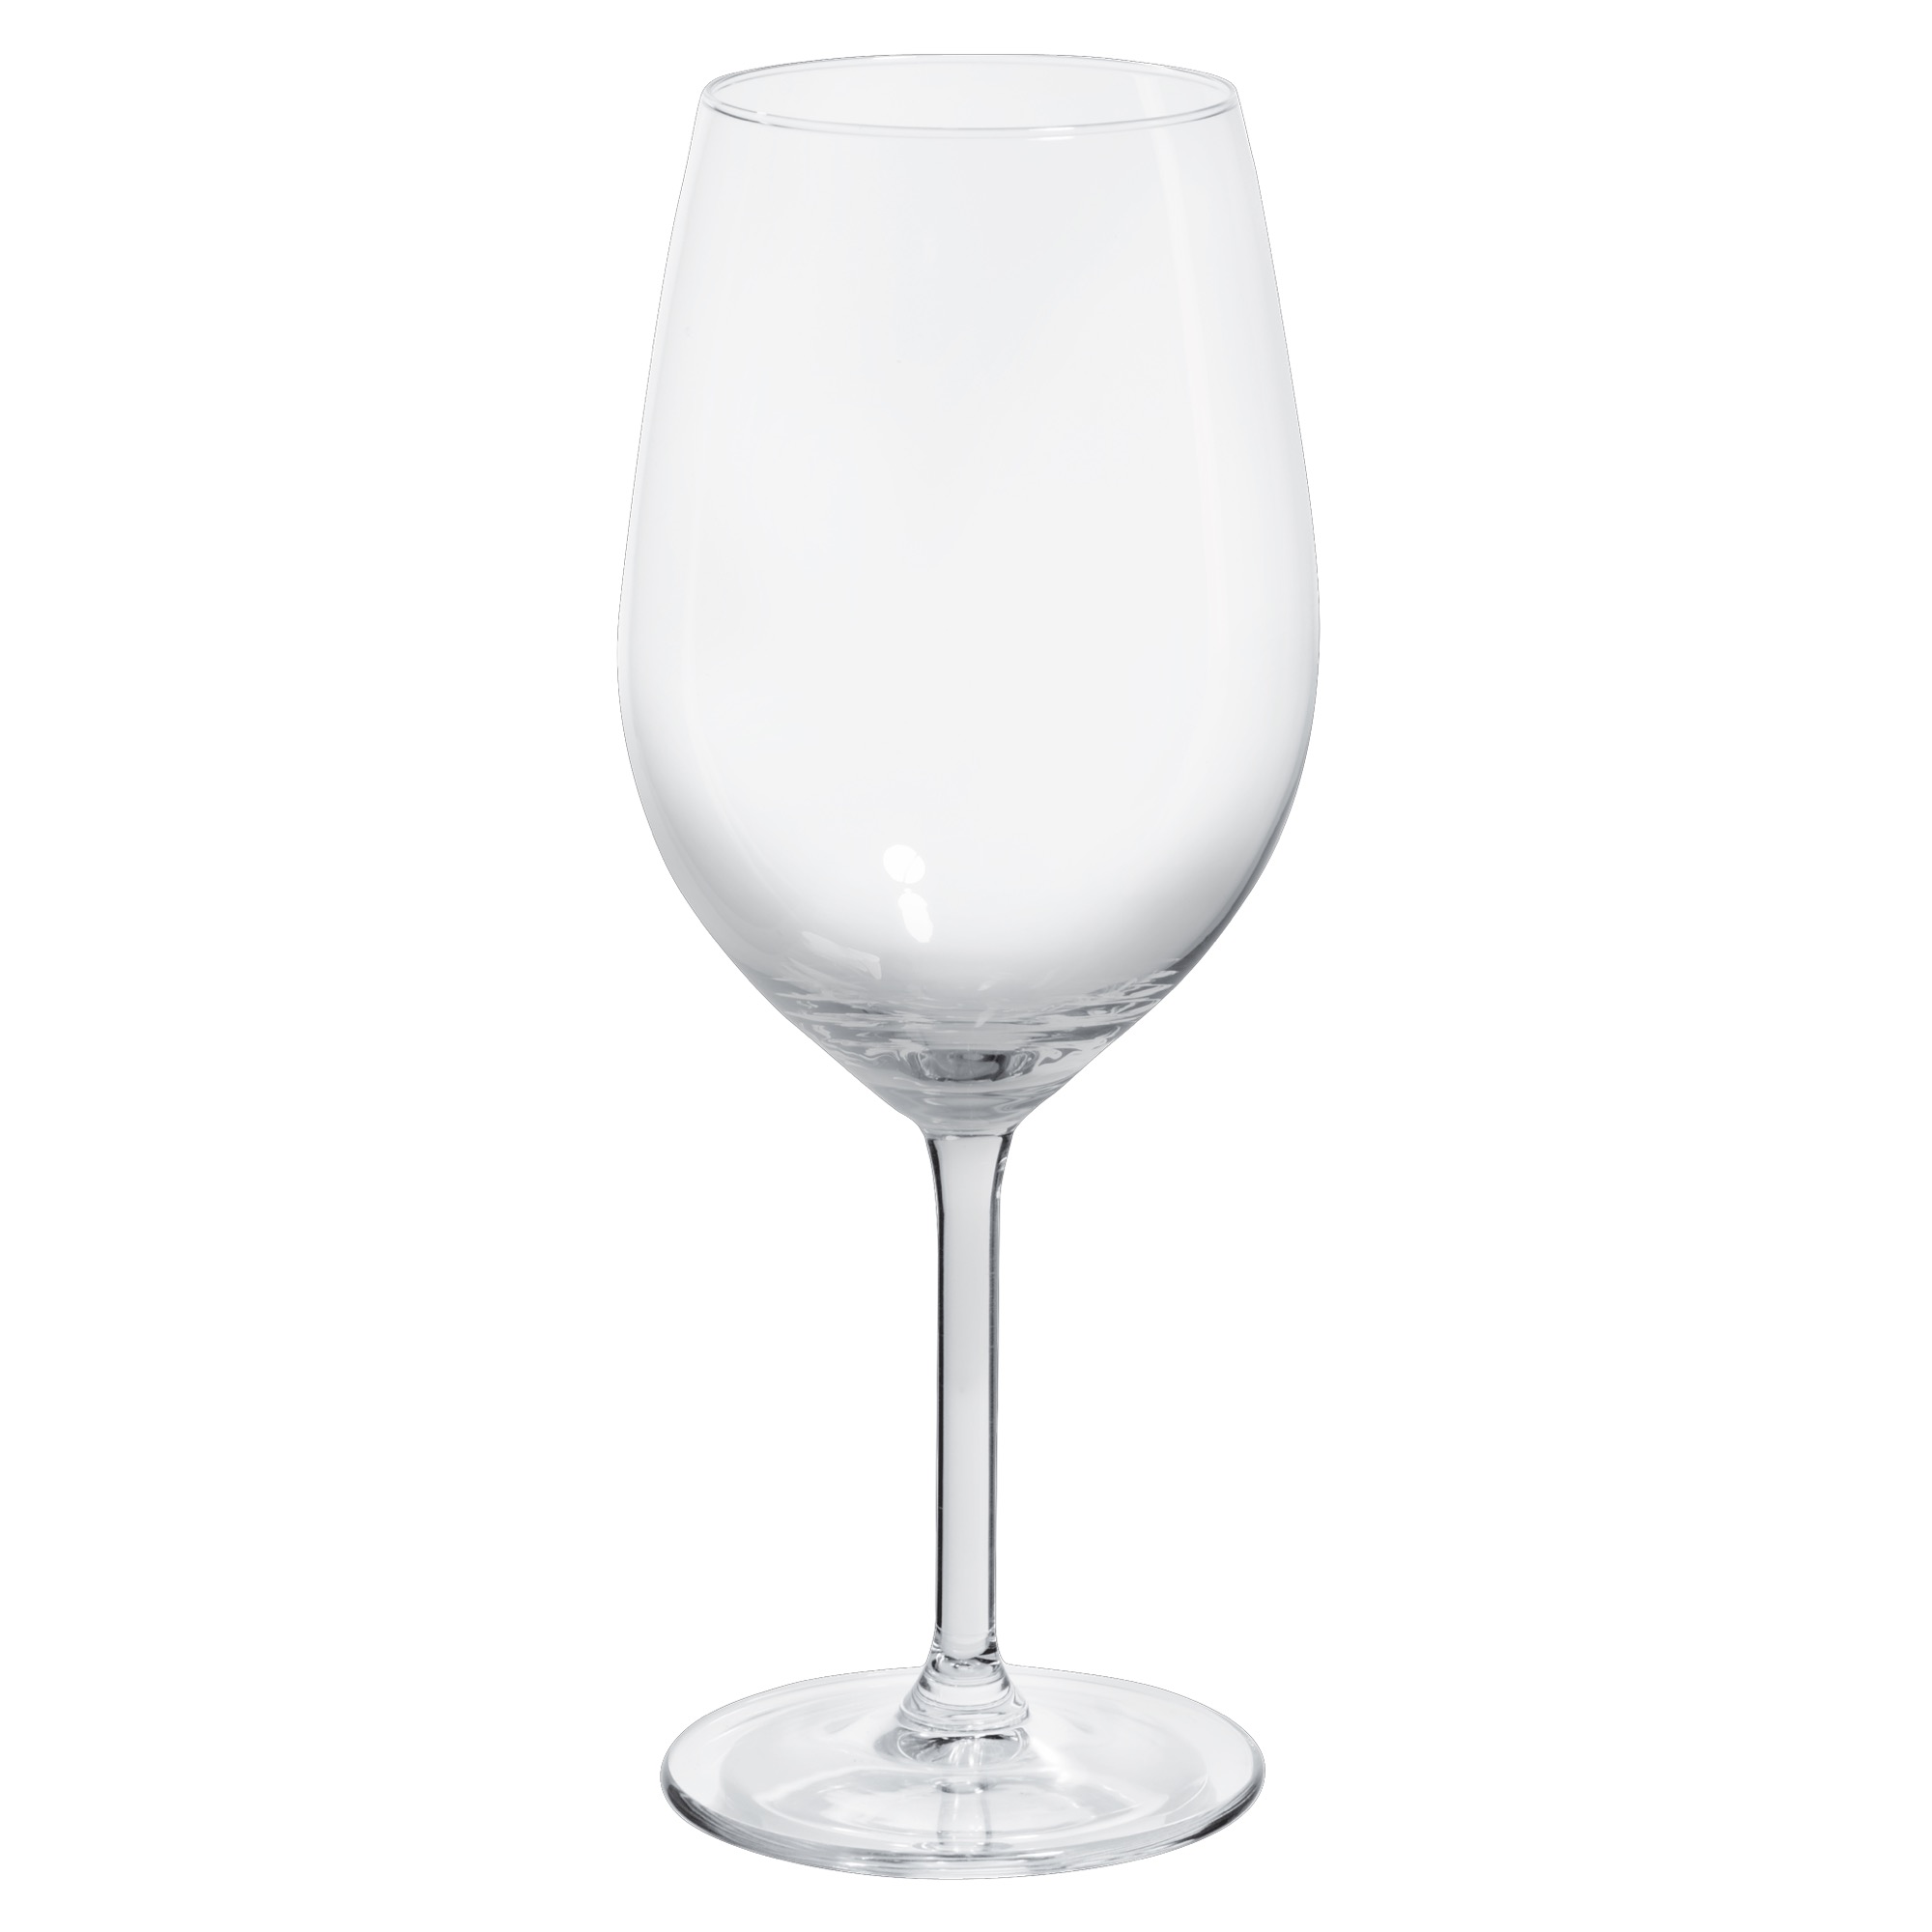 Royal L'Esprit pohár na víno 530ml